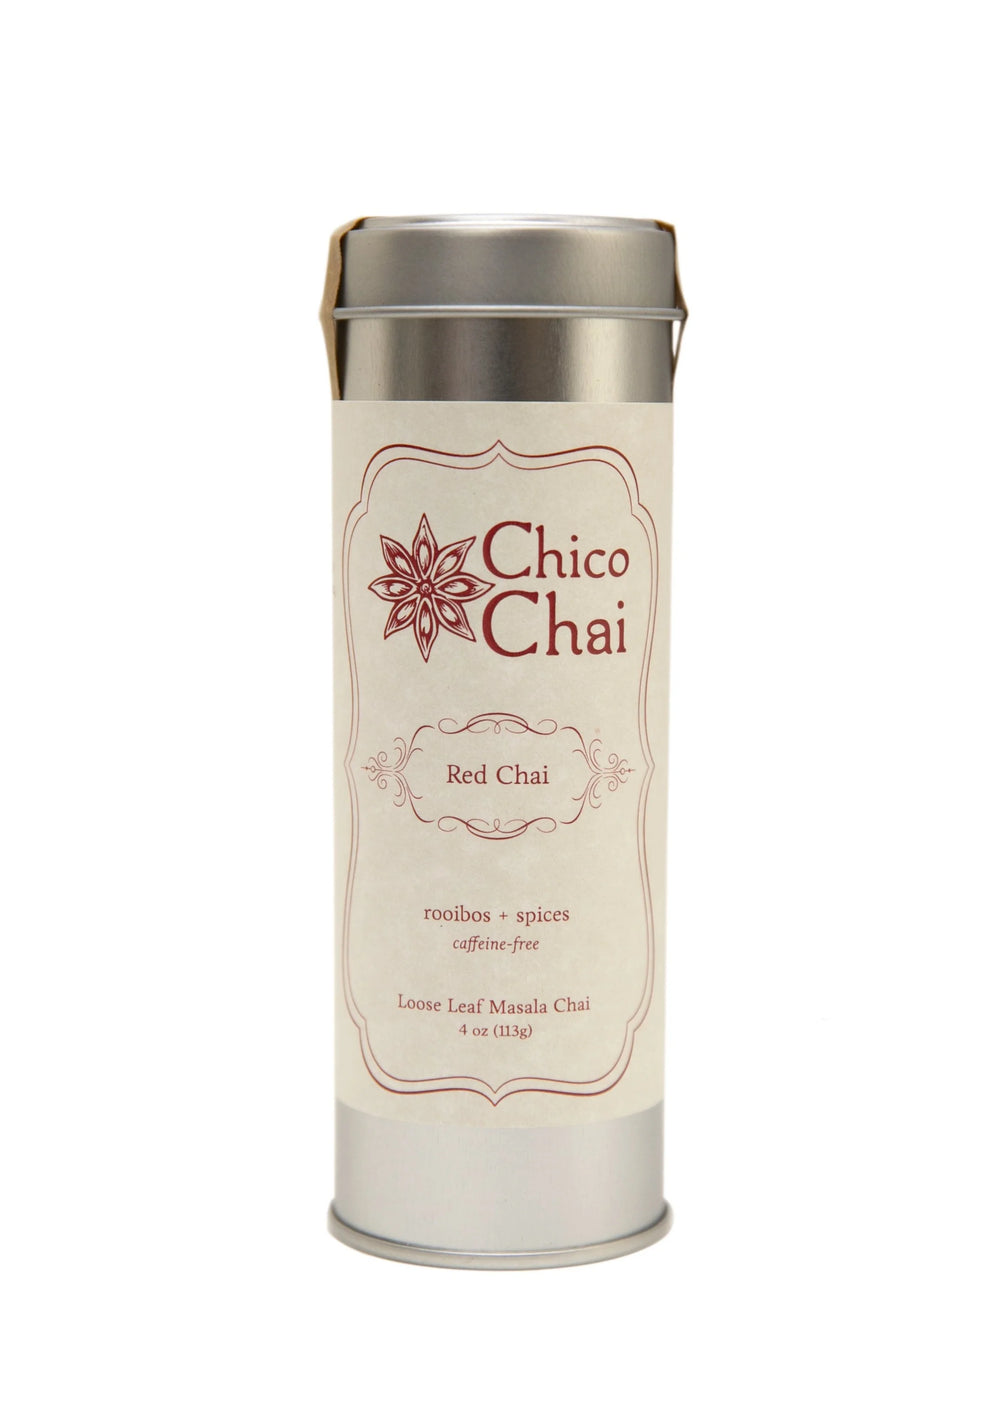 Red Chico Chai (Caffeine-Free)